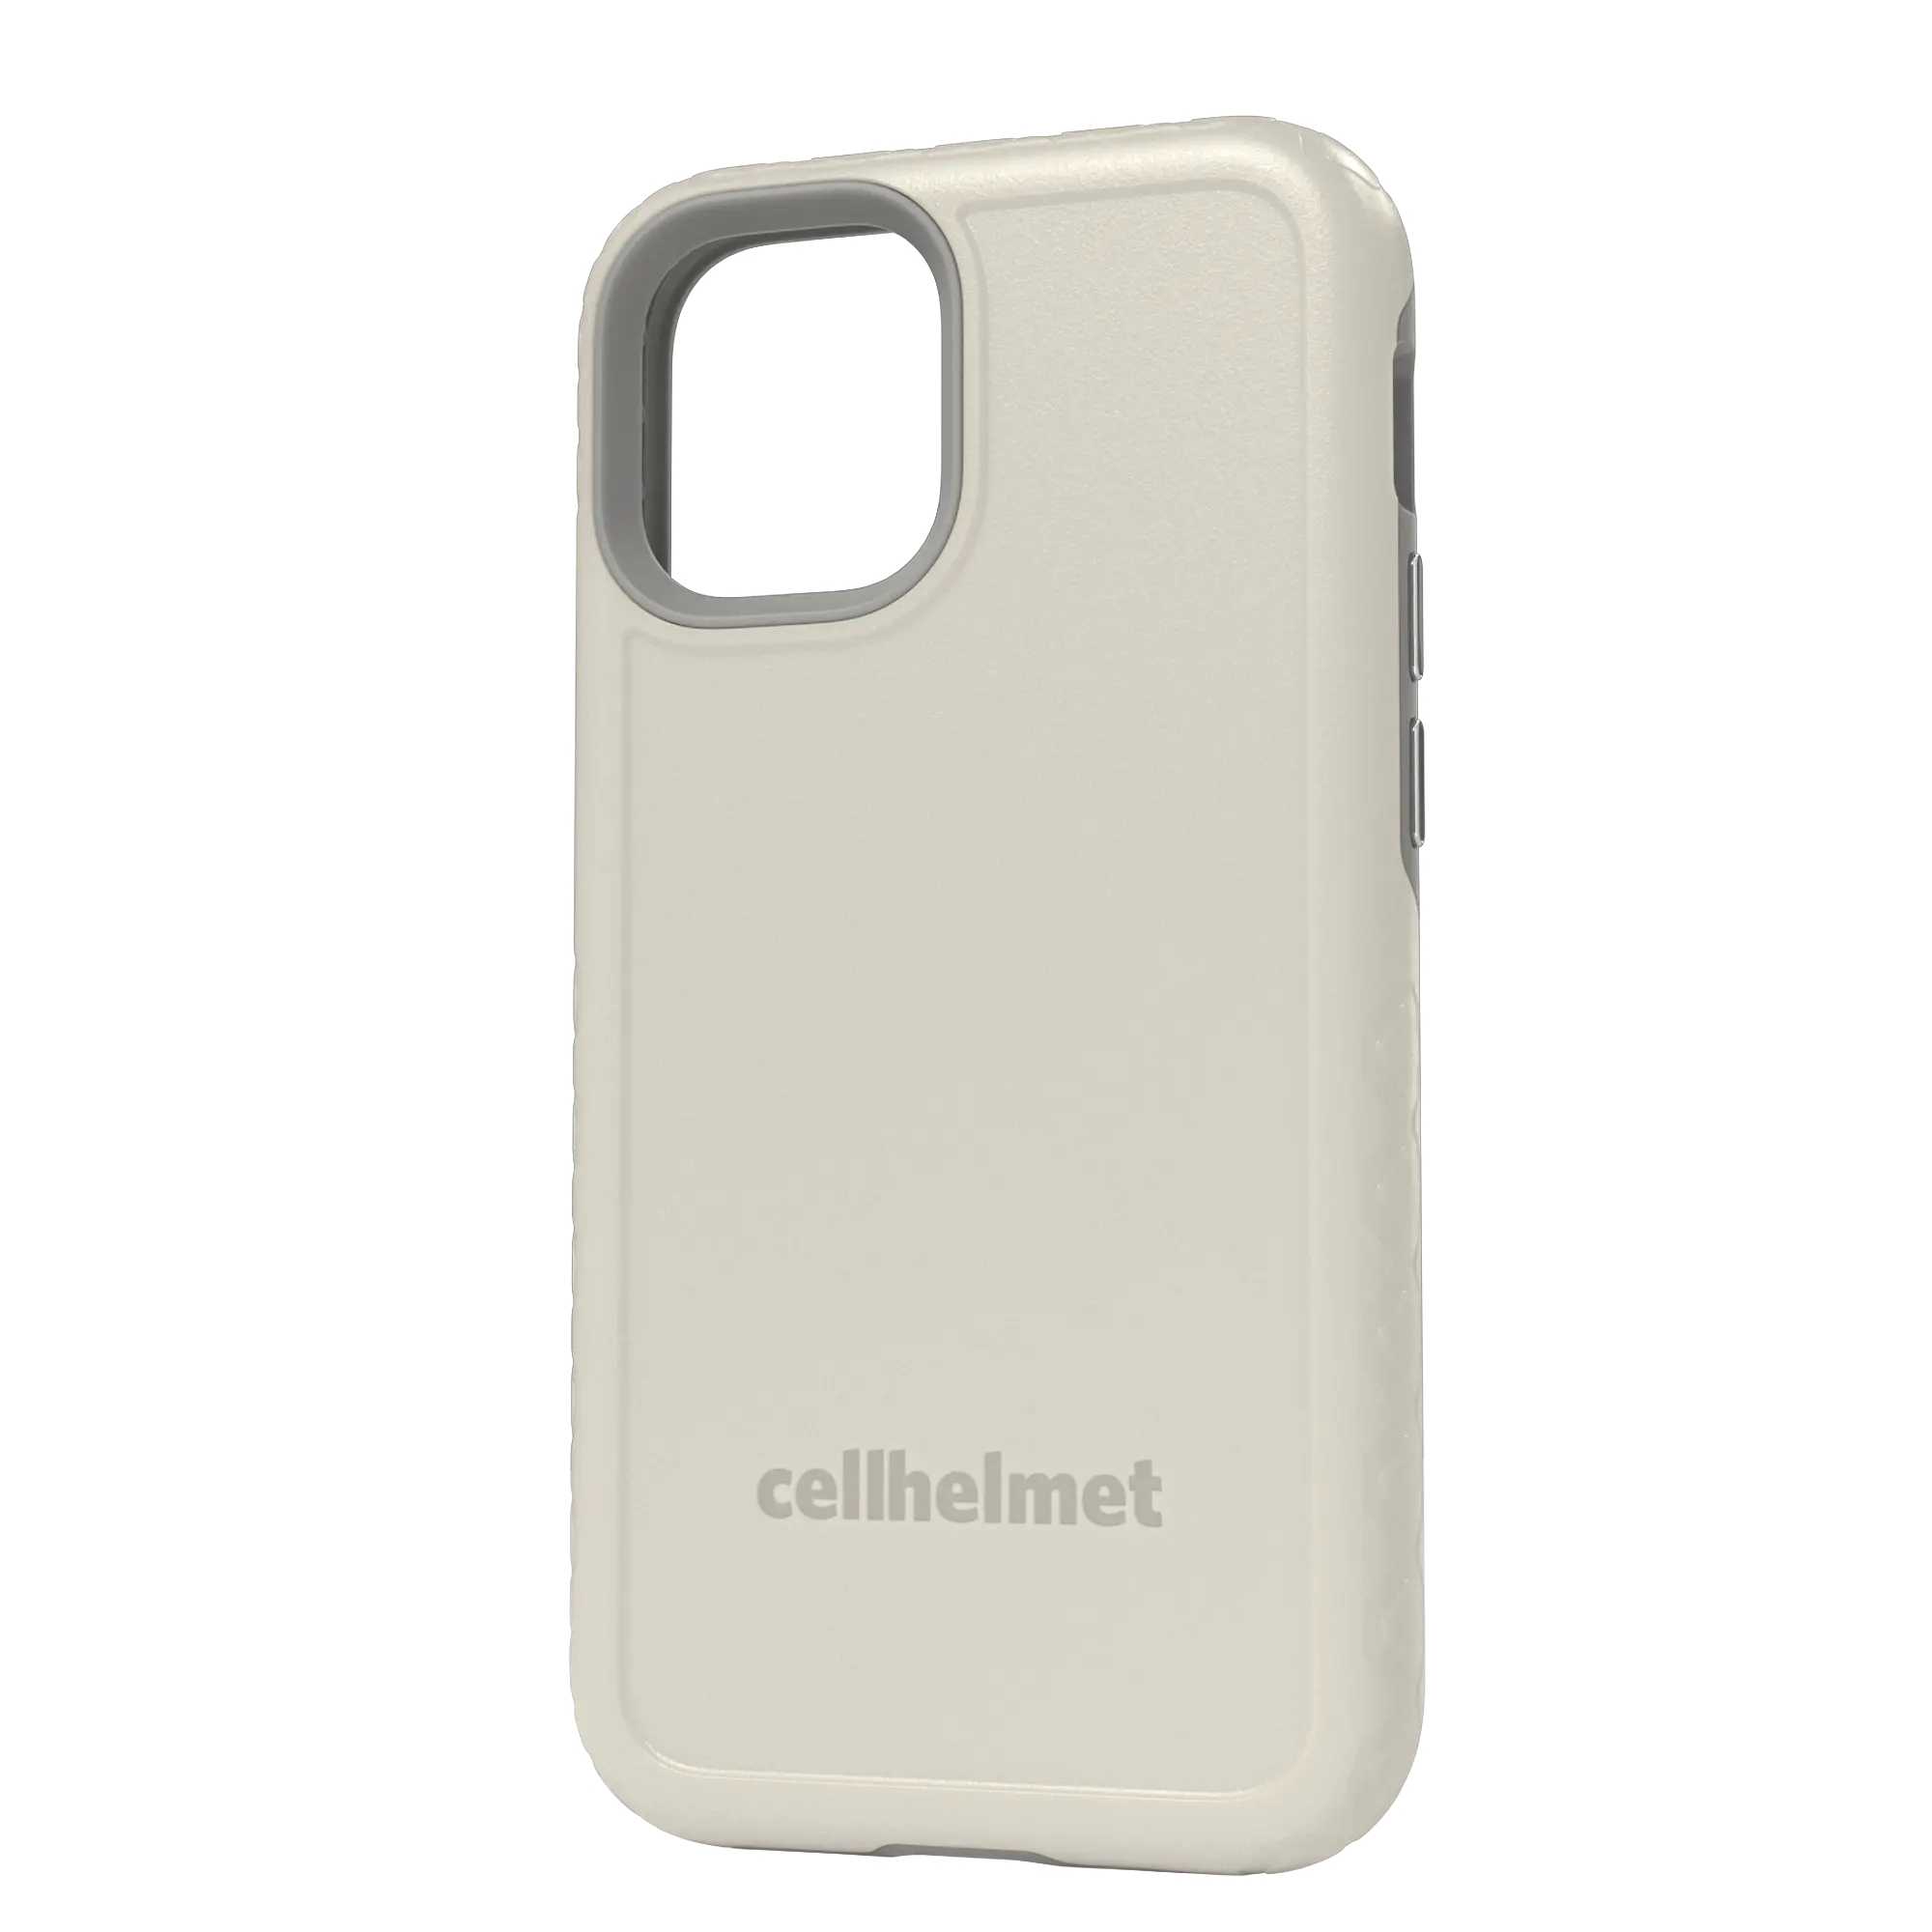 Gray cellhelmet Personalized Case for iPhone 12 Mini